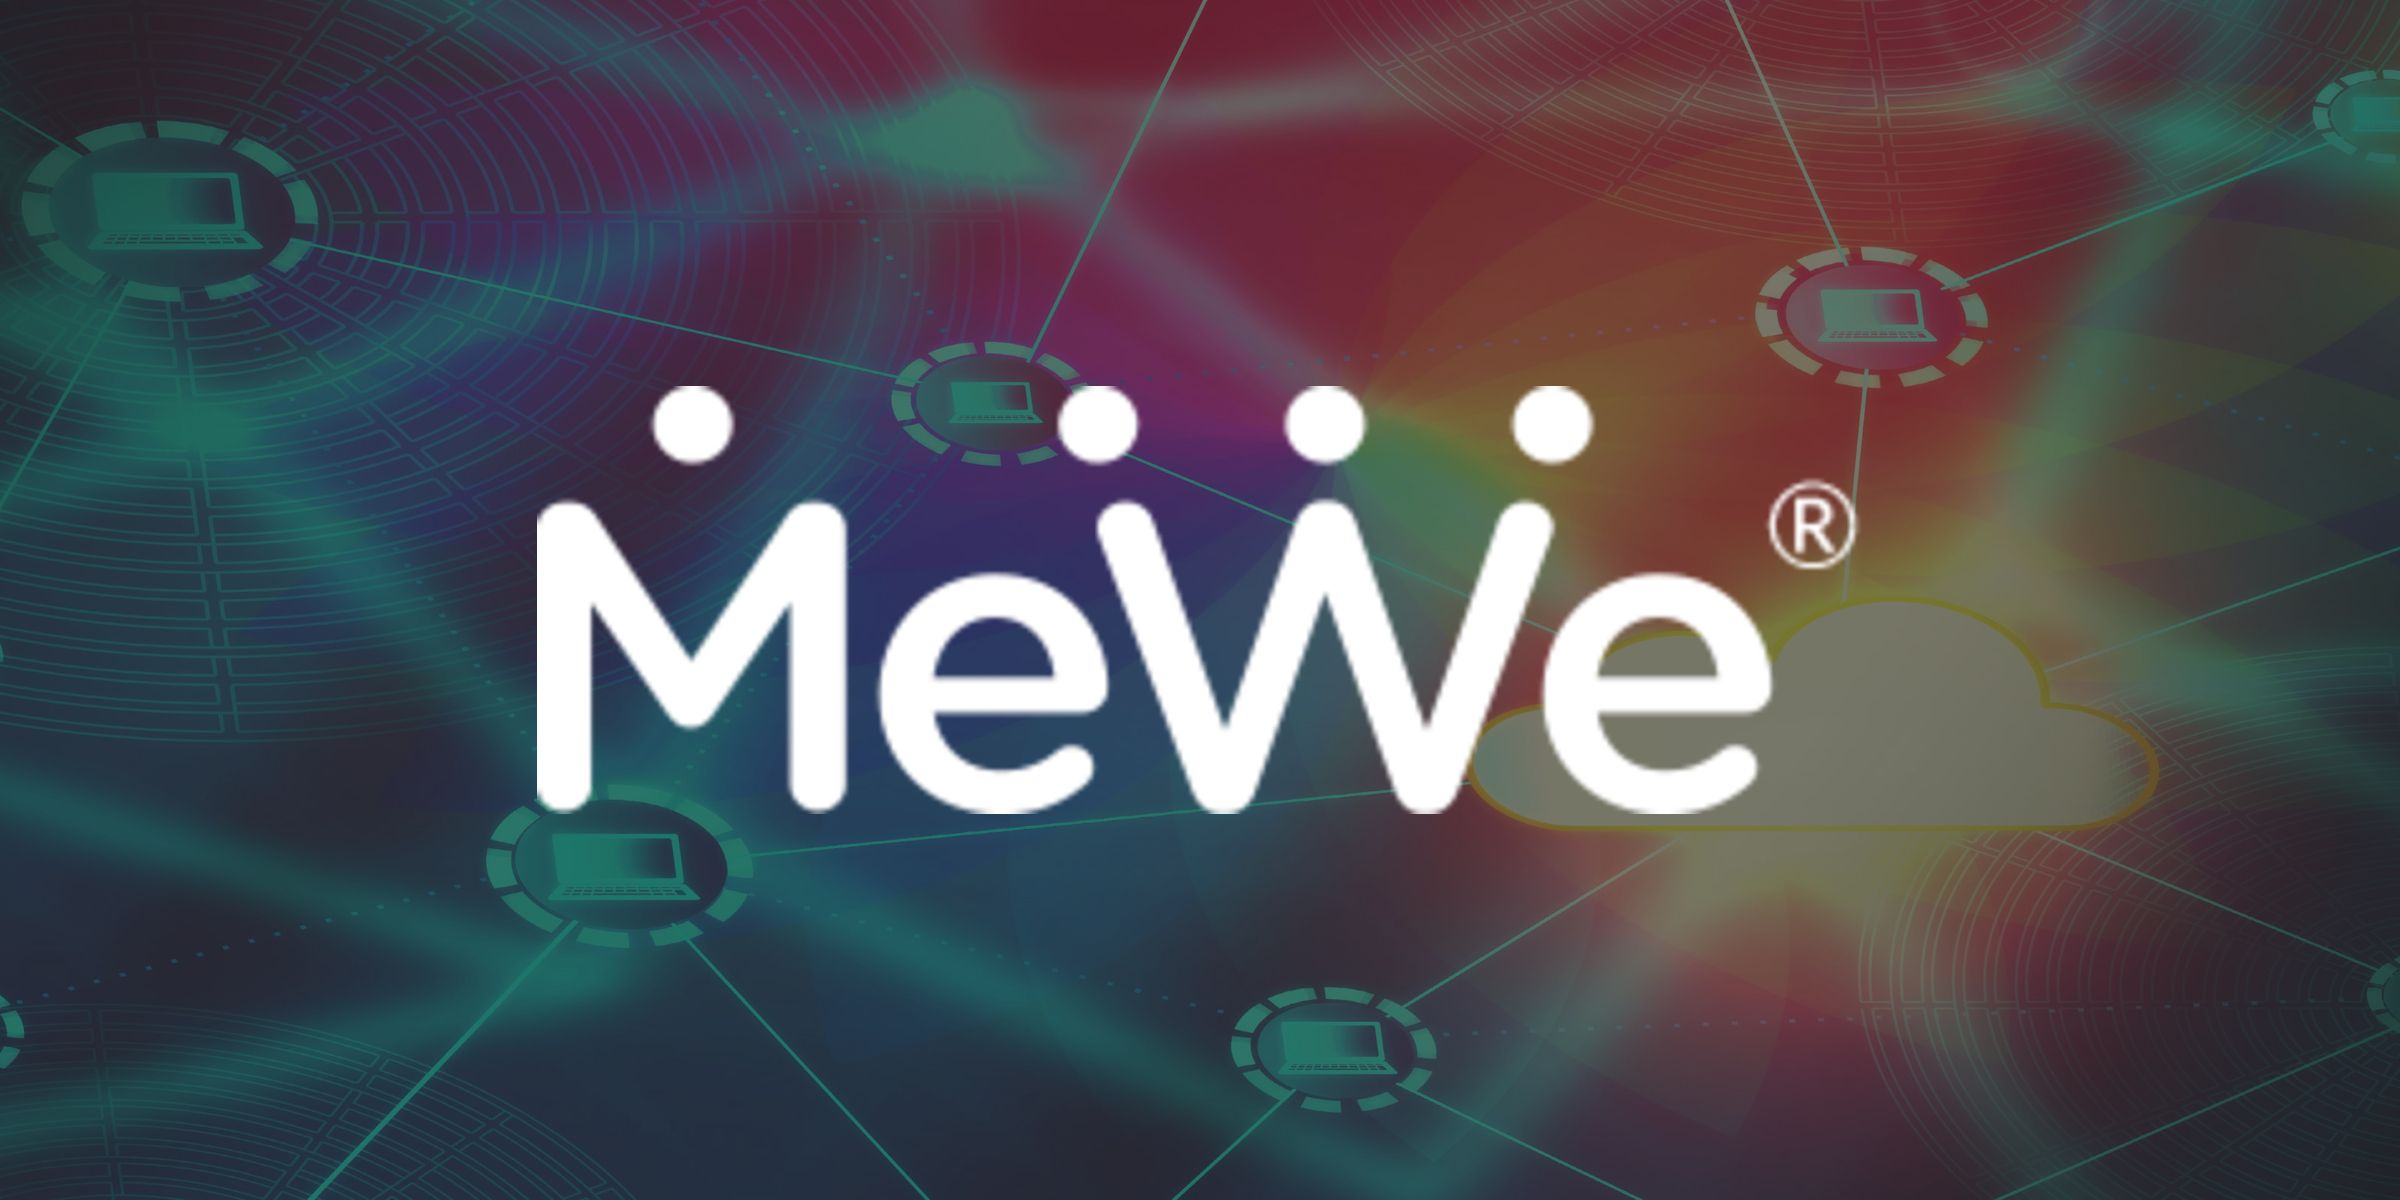 MeWe Reviews - 22 Reviews of Mewe.com